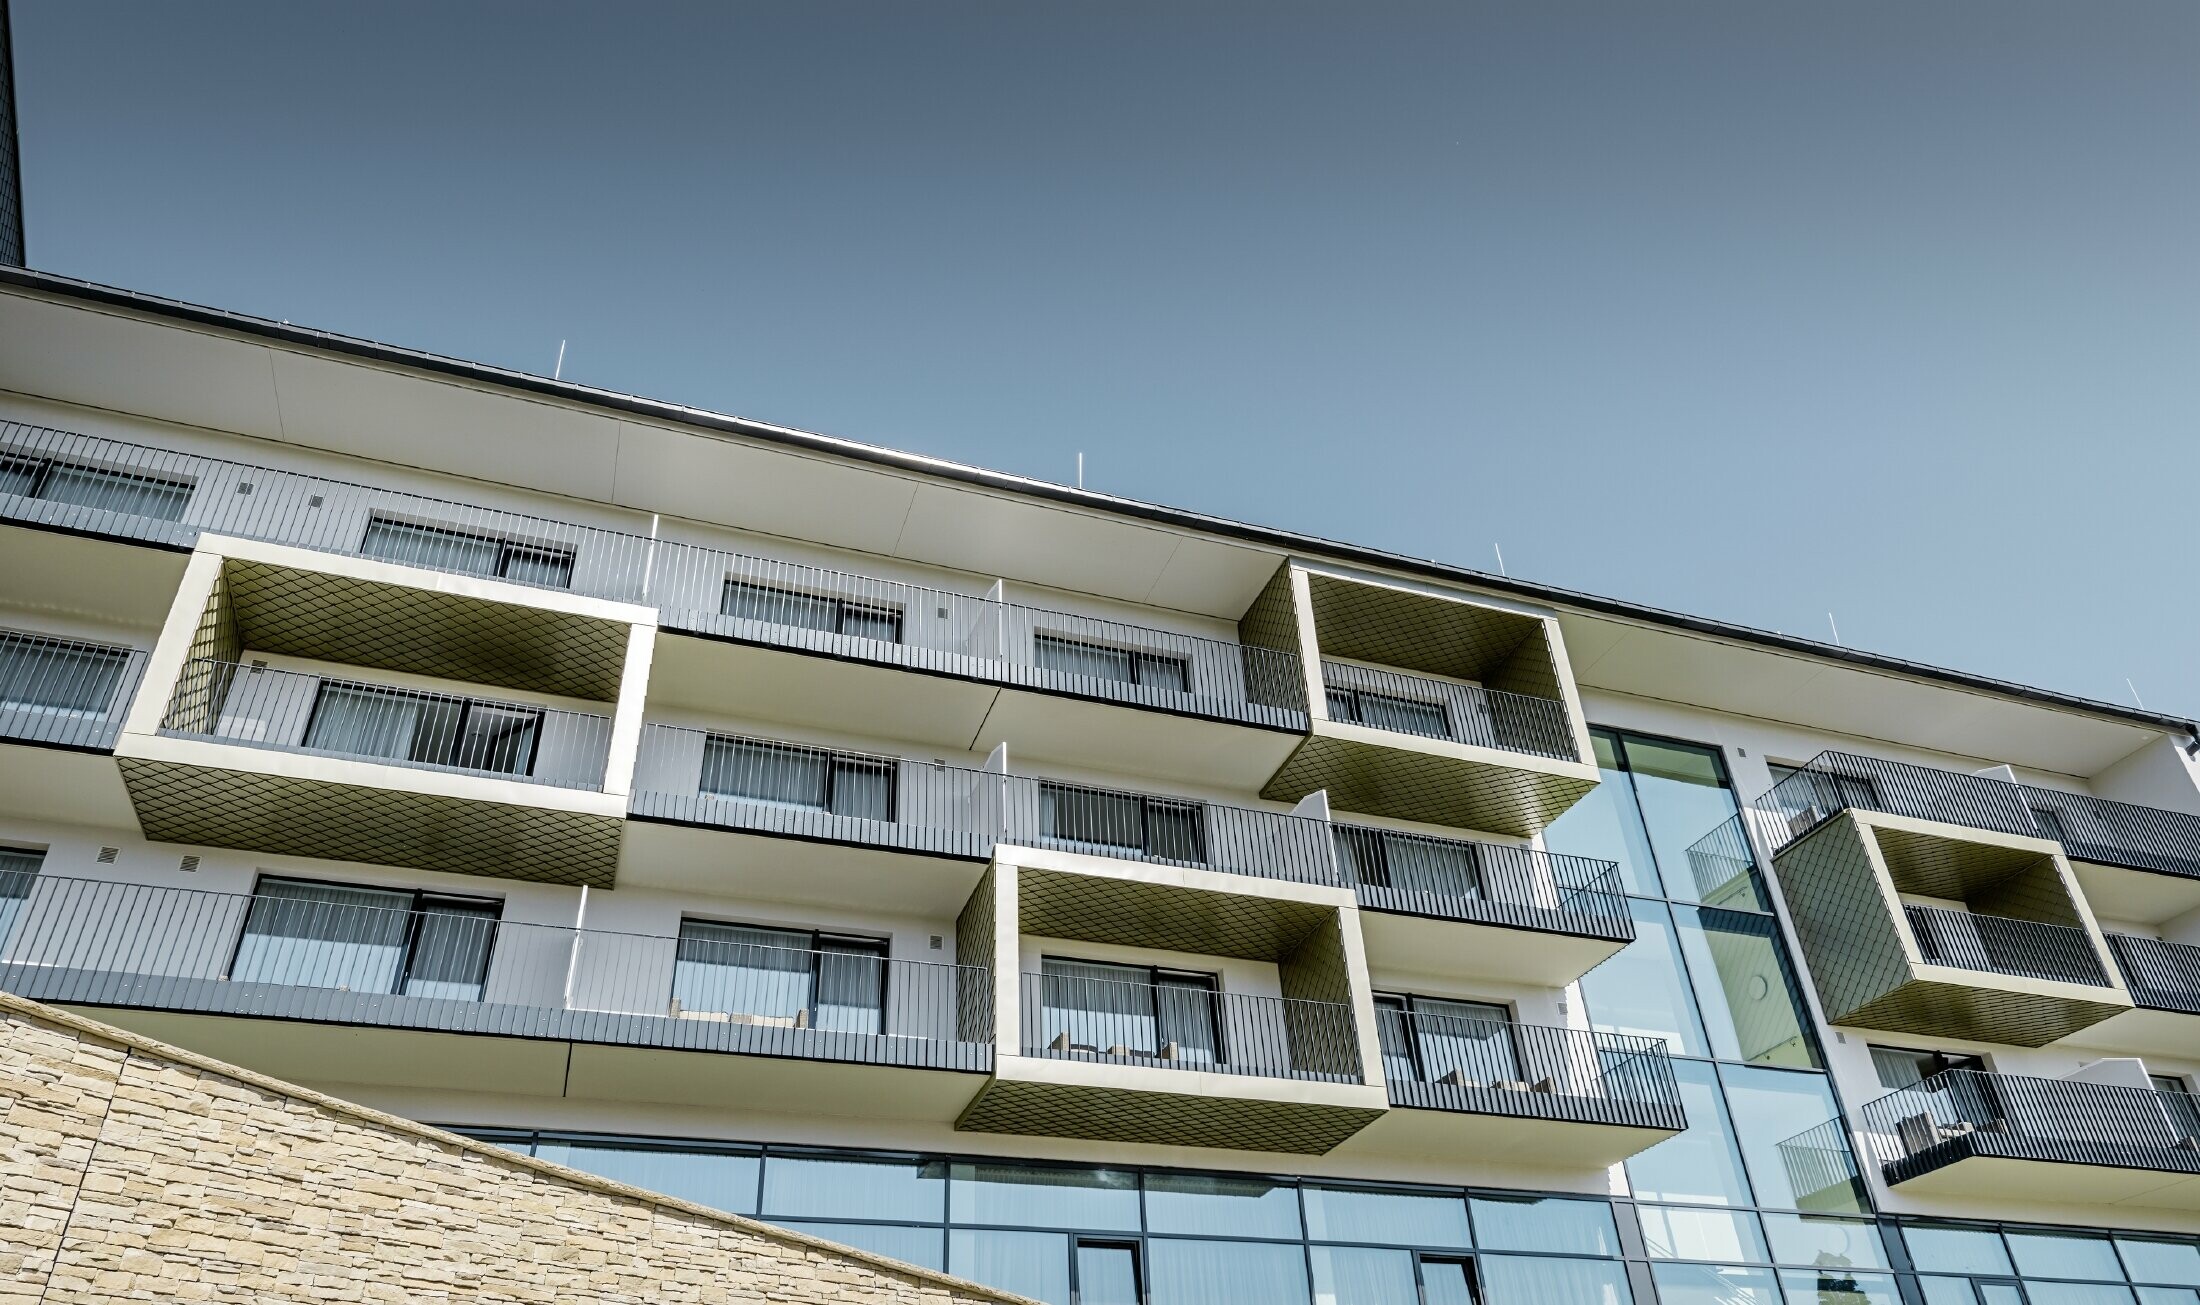 Balcony cladding at Hotel Edita in Scheidegg with the PREFA rhomboid façade tile in light bronze